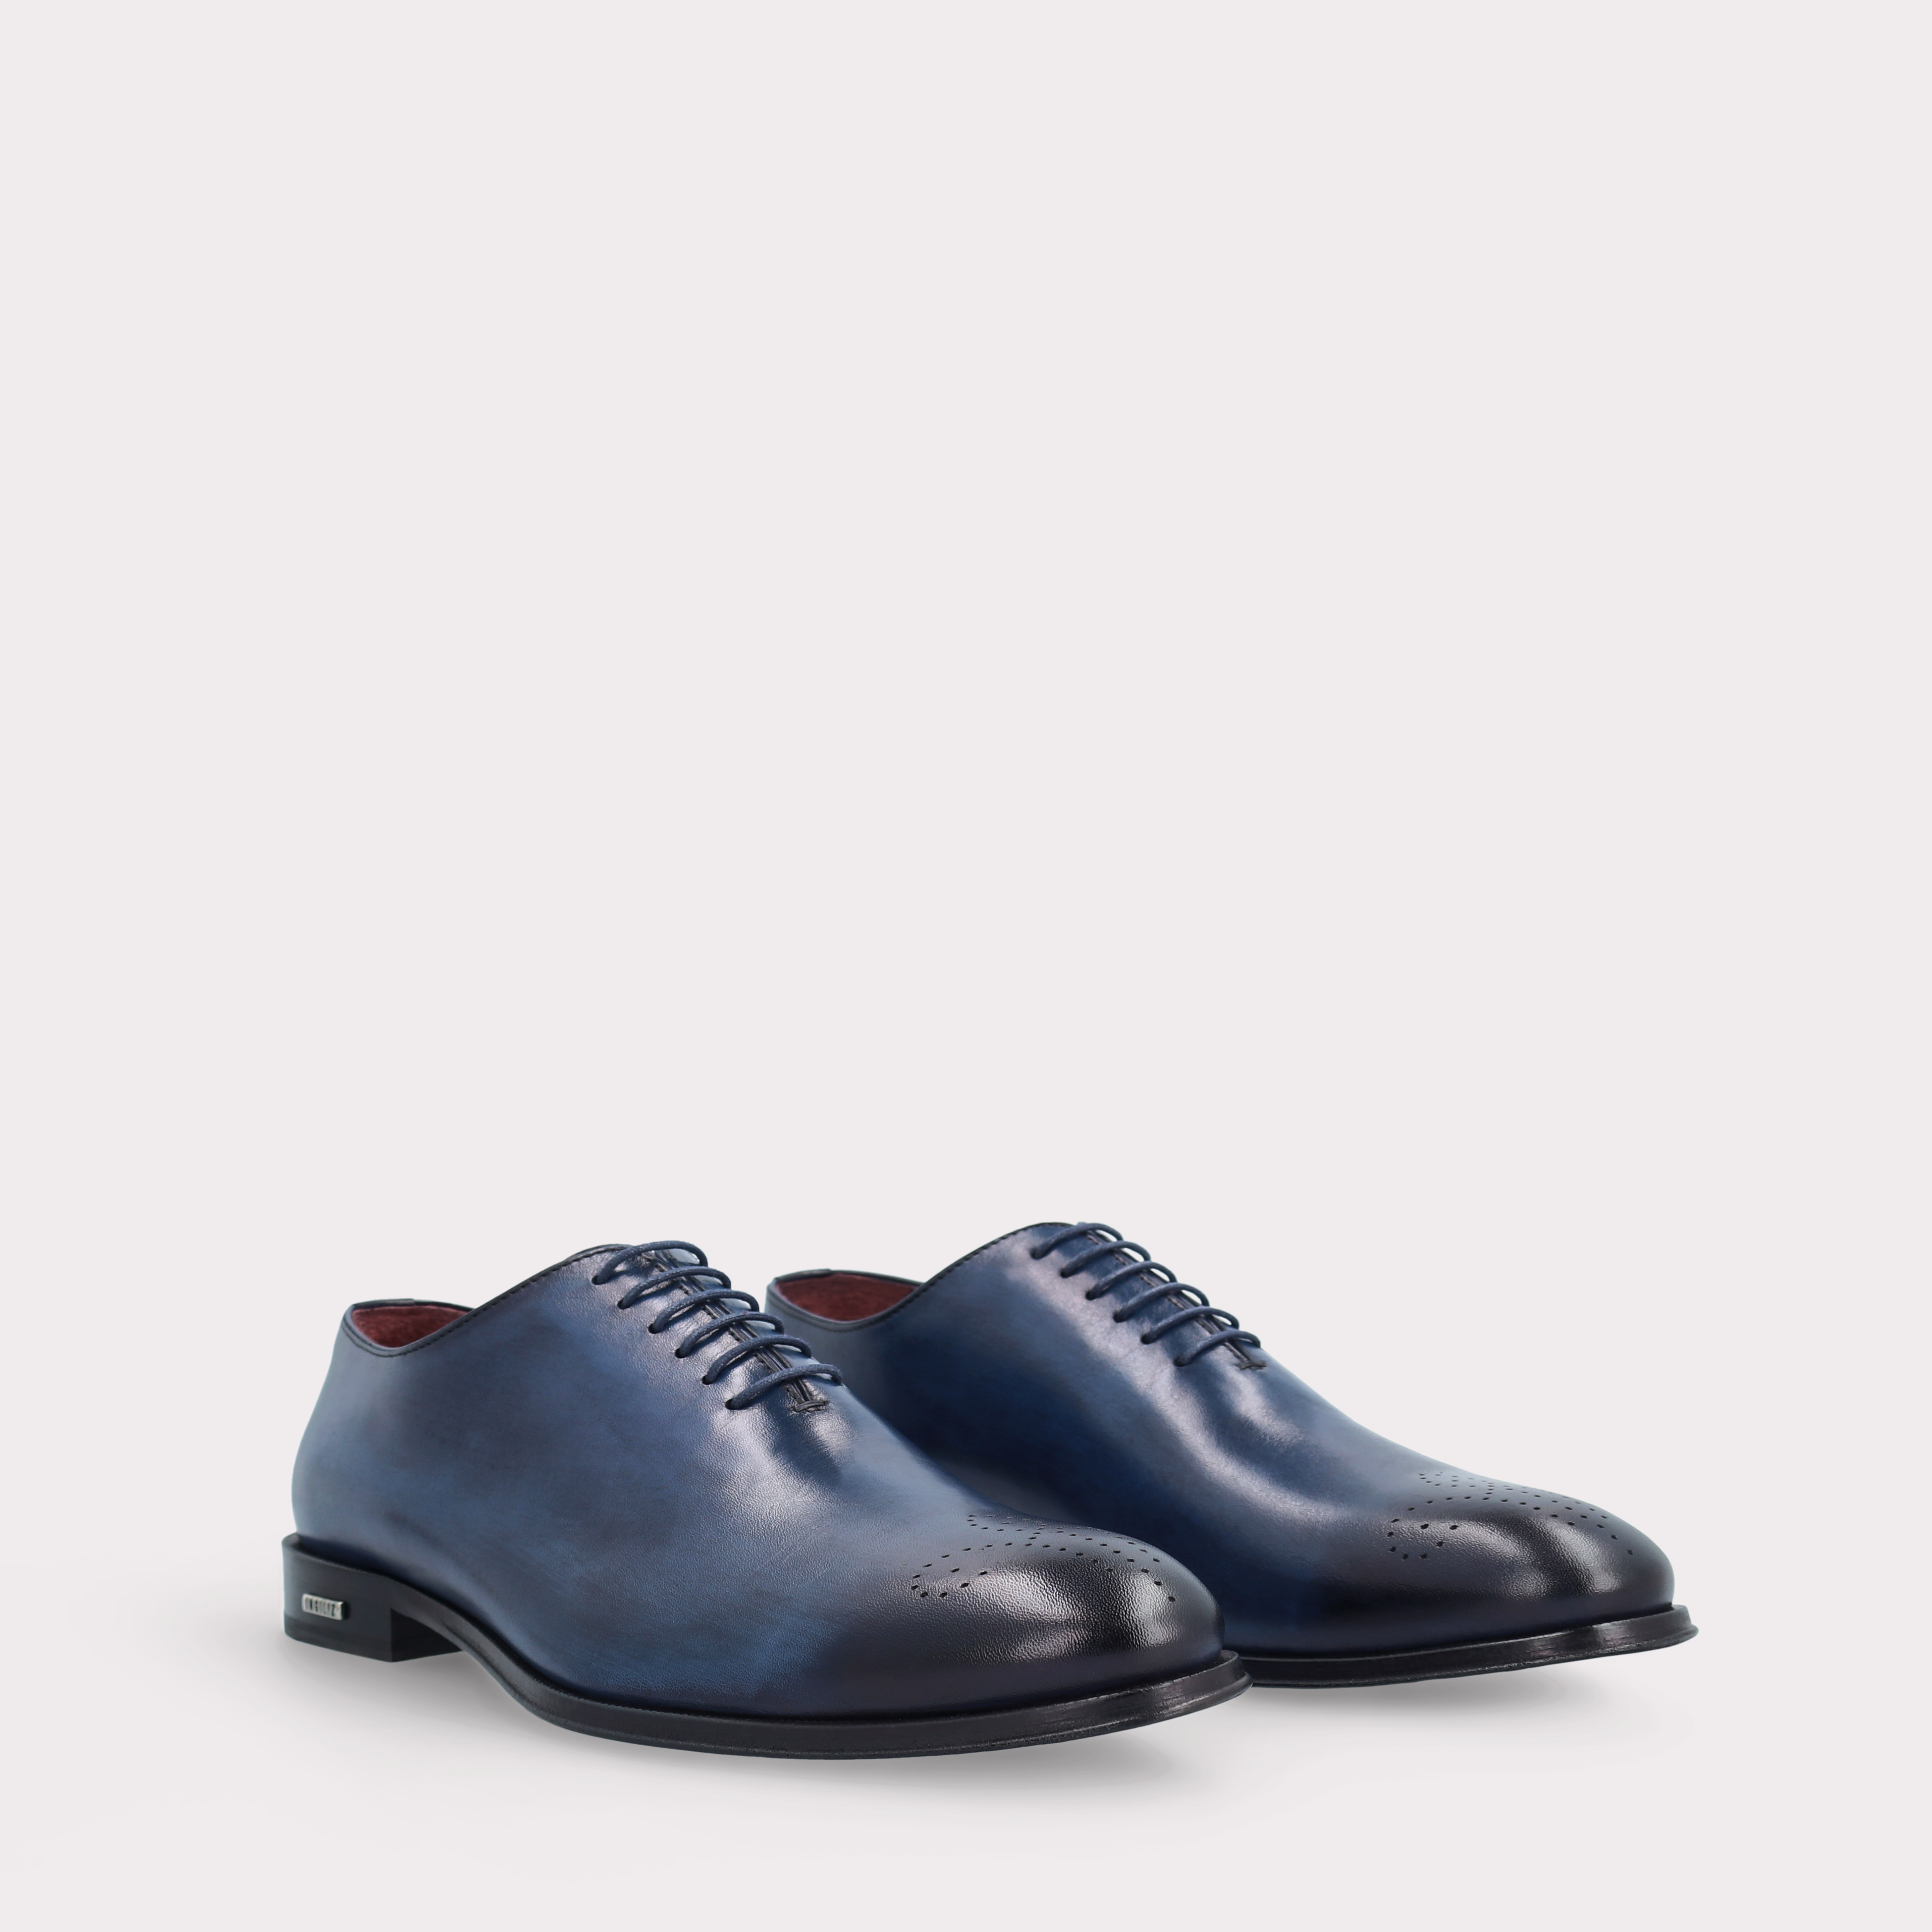 PRATO 01 dark blue leather oxford shoes